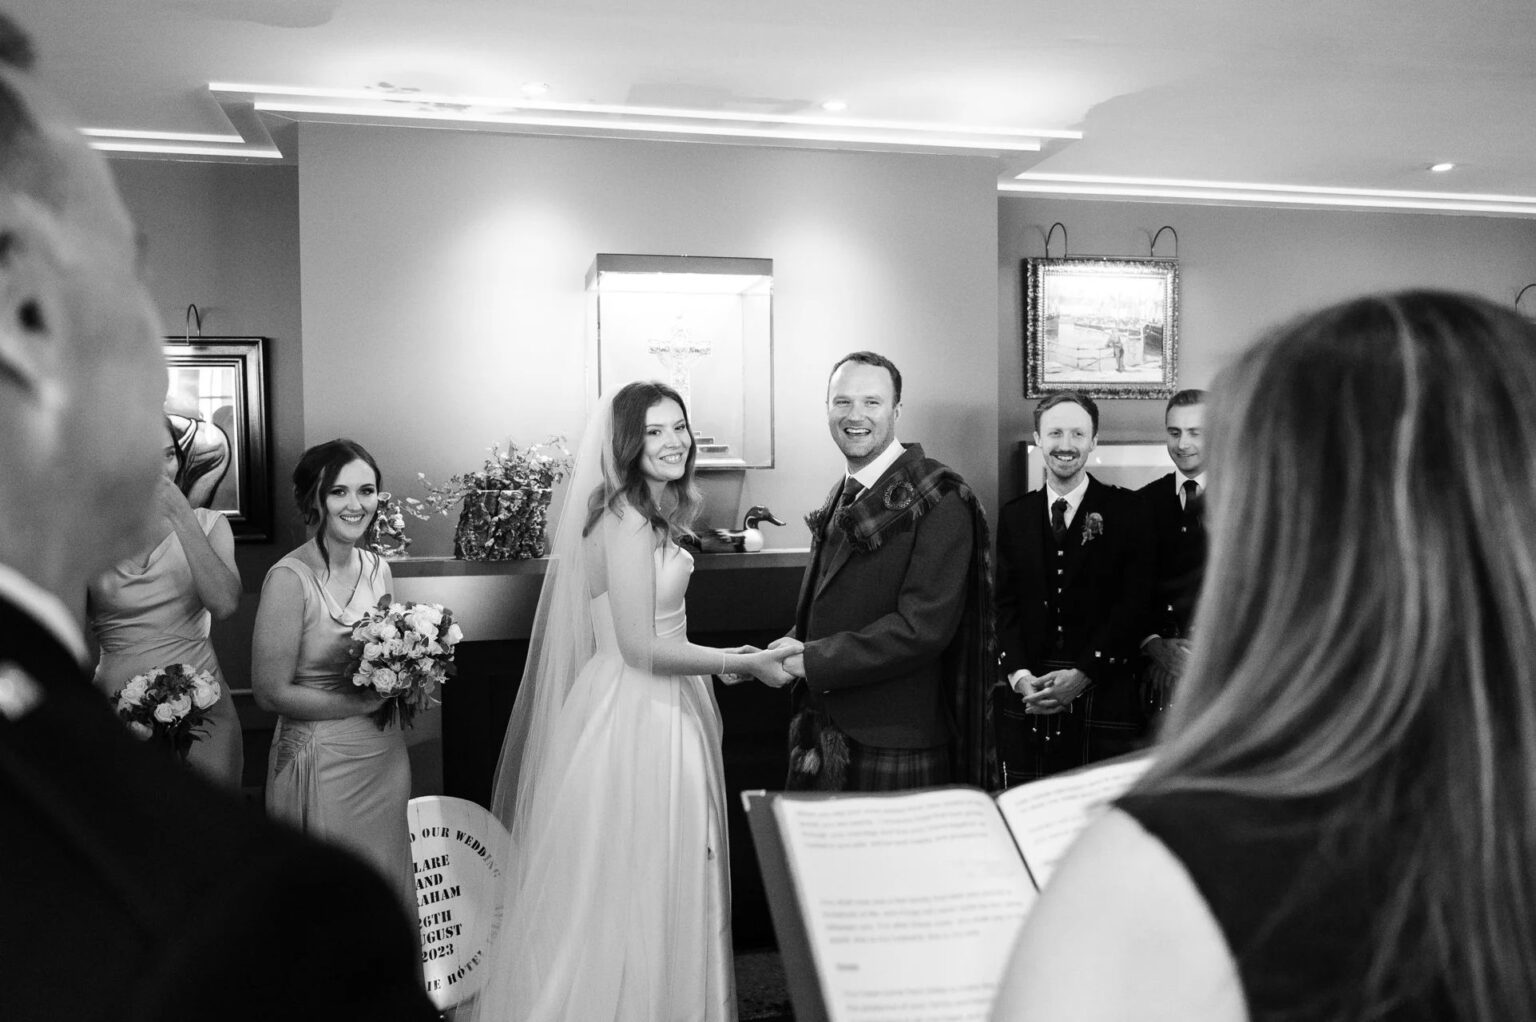 Photos courtesy of My Islay Wedding